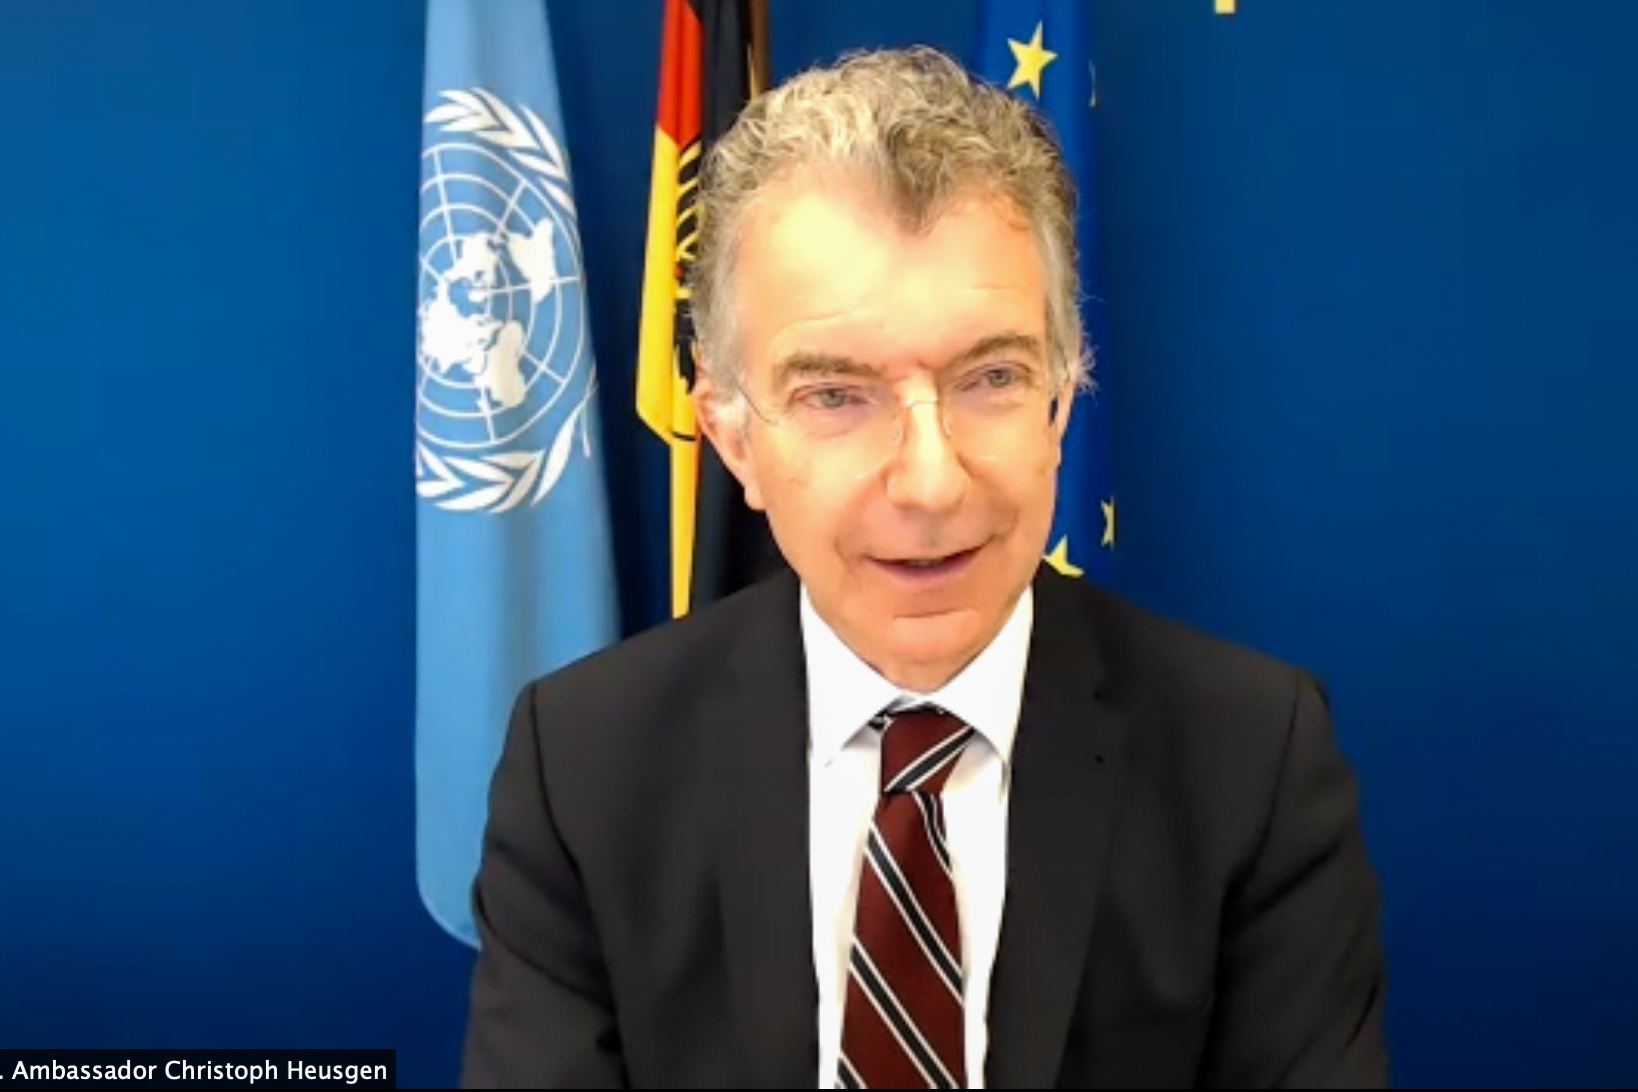 Christoph Heusgen, Germany’s Permanent Representative to the UN